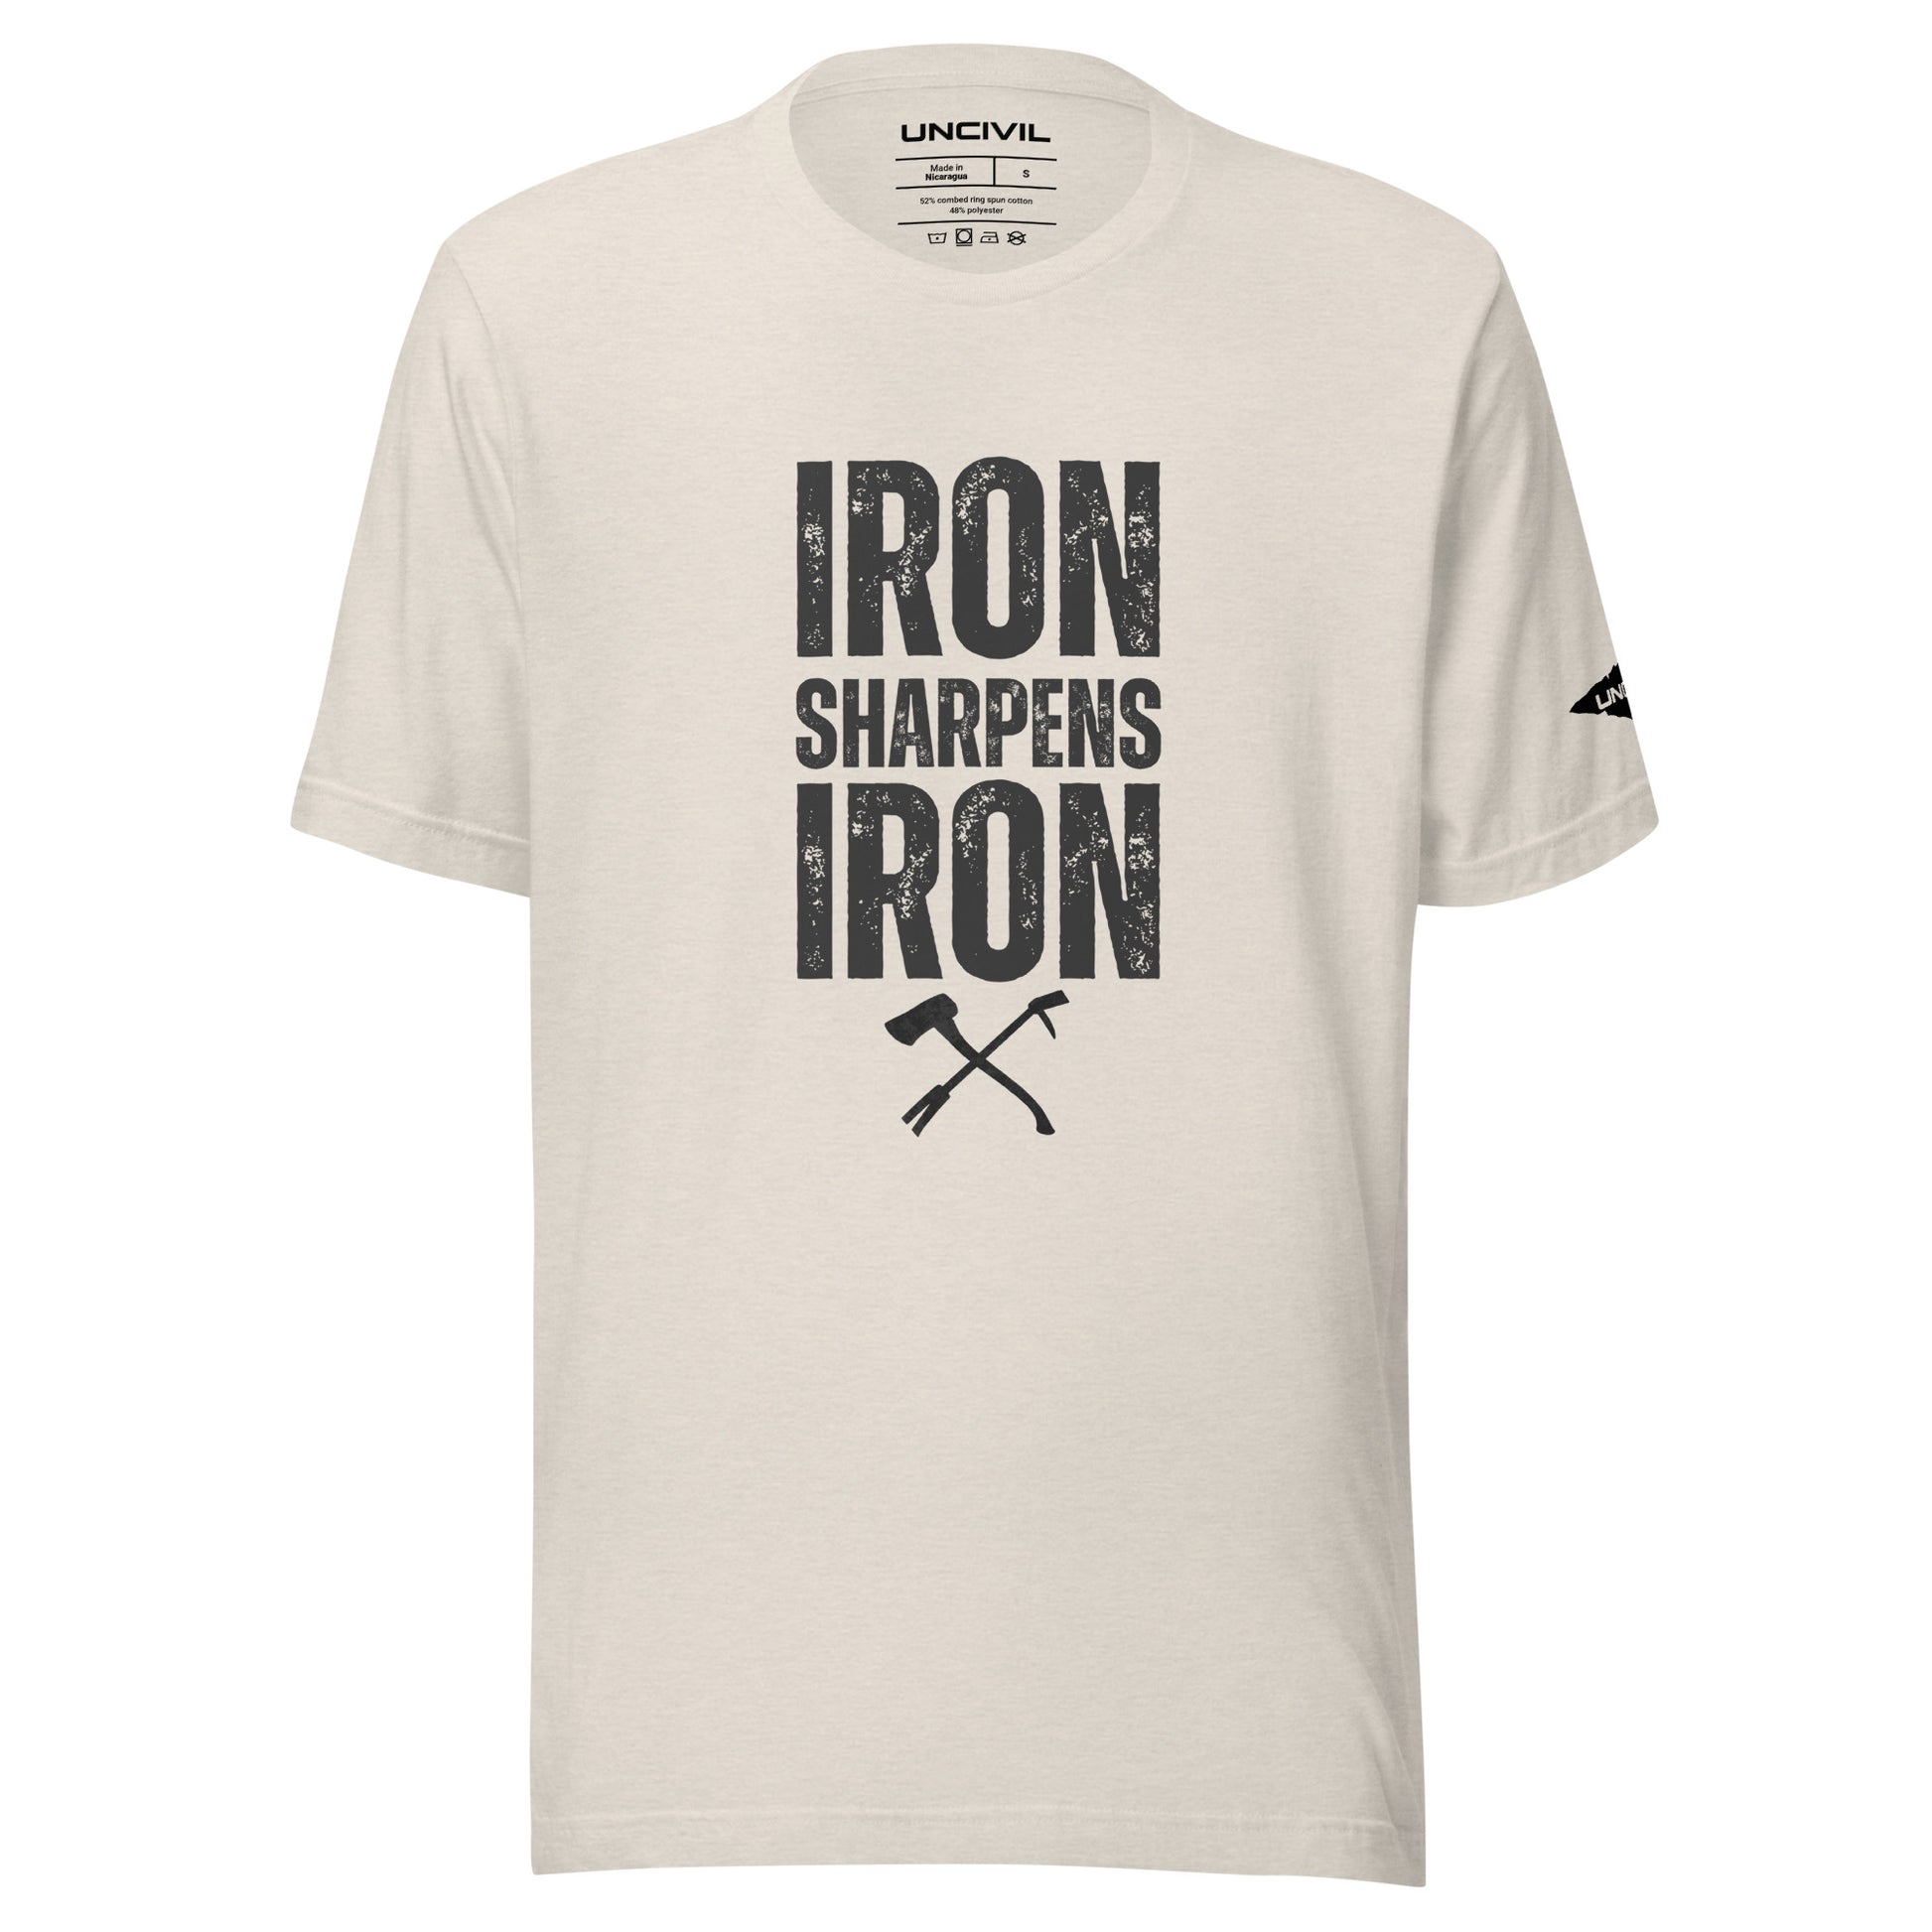 Iron Sharpens Iron Proverbs 27:17 Unisex T-shirt with a set of irons - Heather Dust Cream shirt